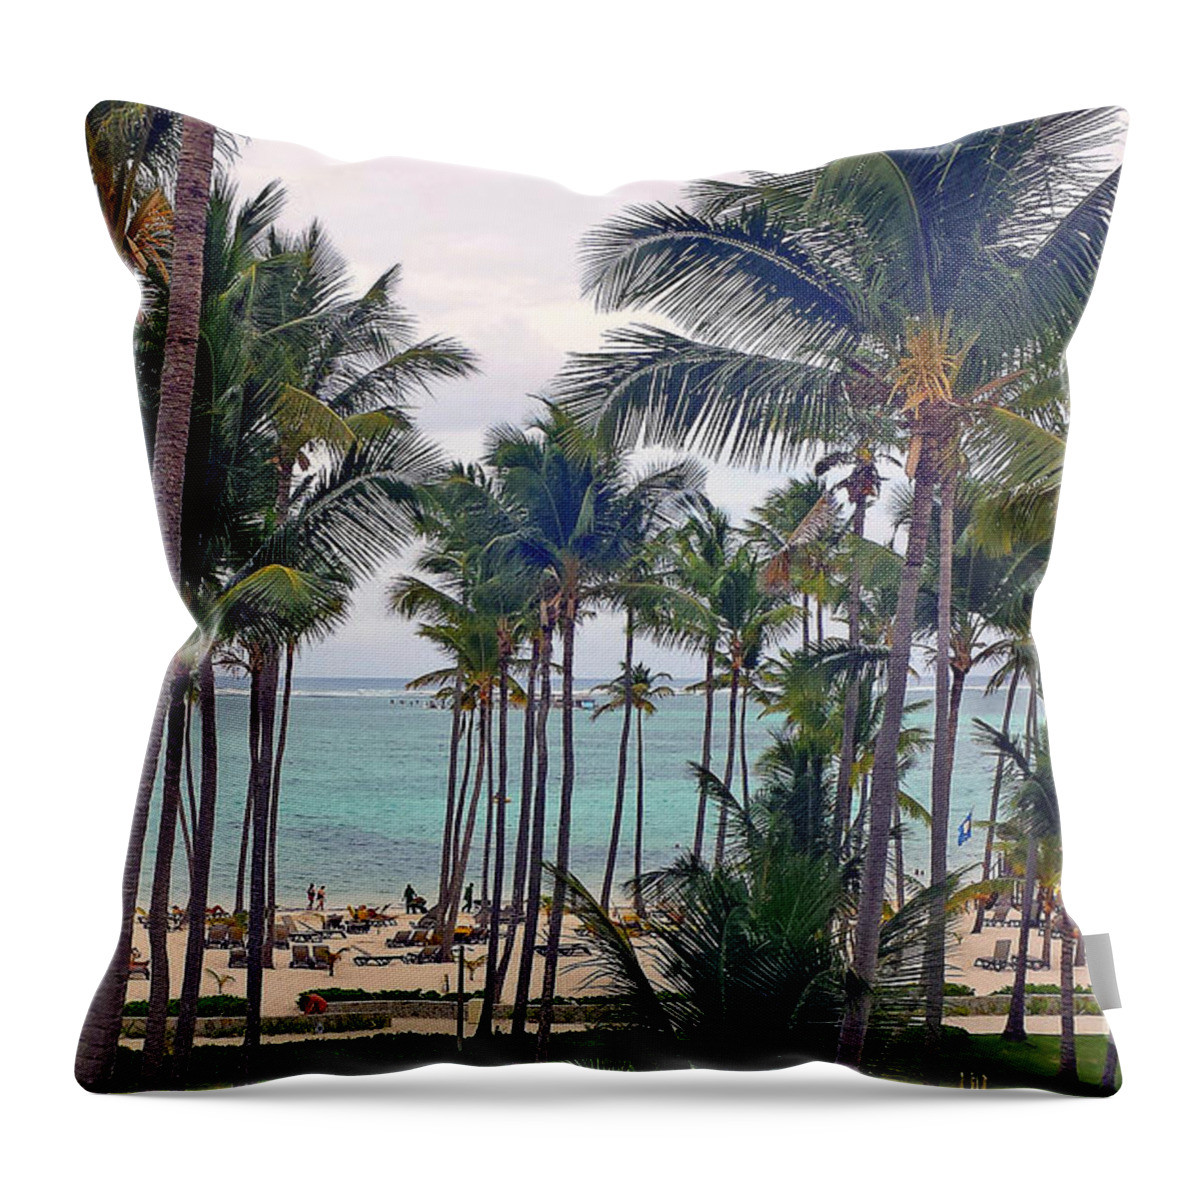 Punta Cana Throw Pillow featuring the photograph Punta Cana by Kay Novy